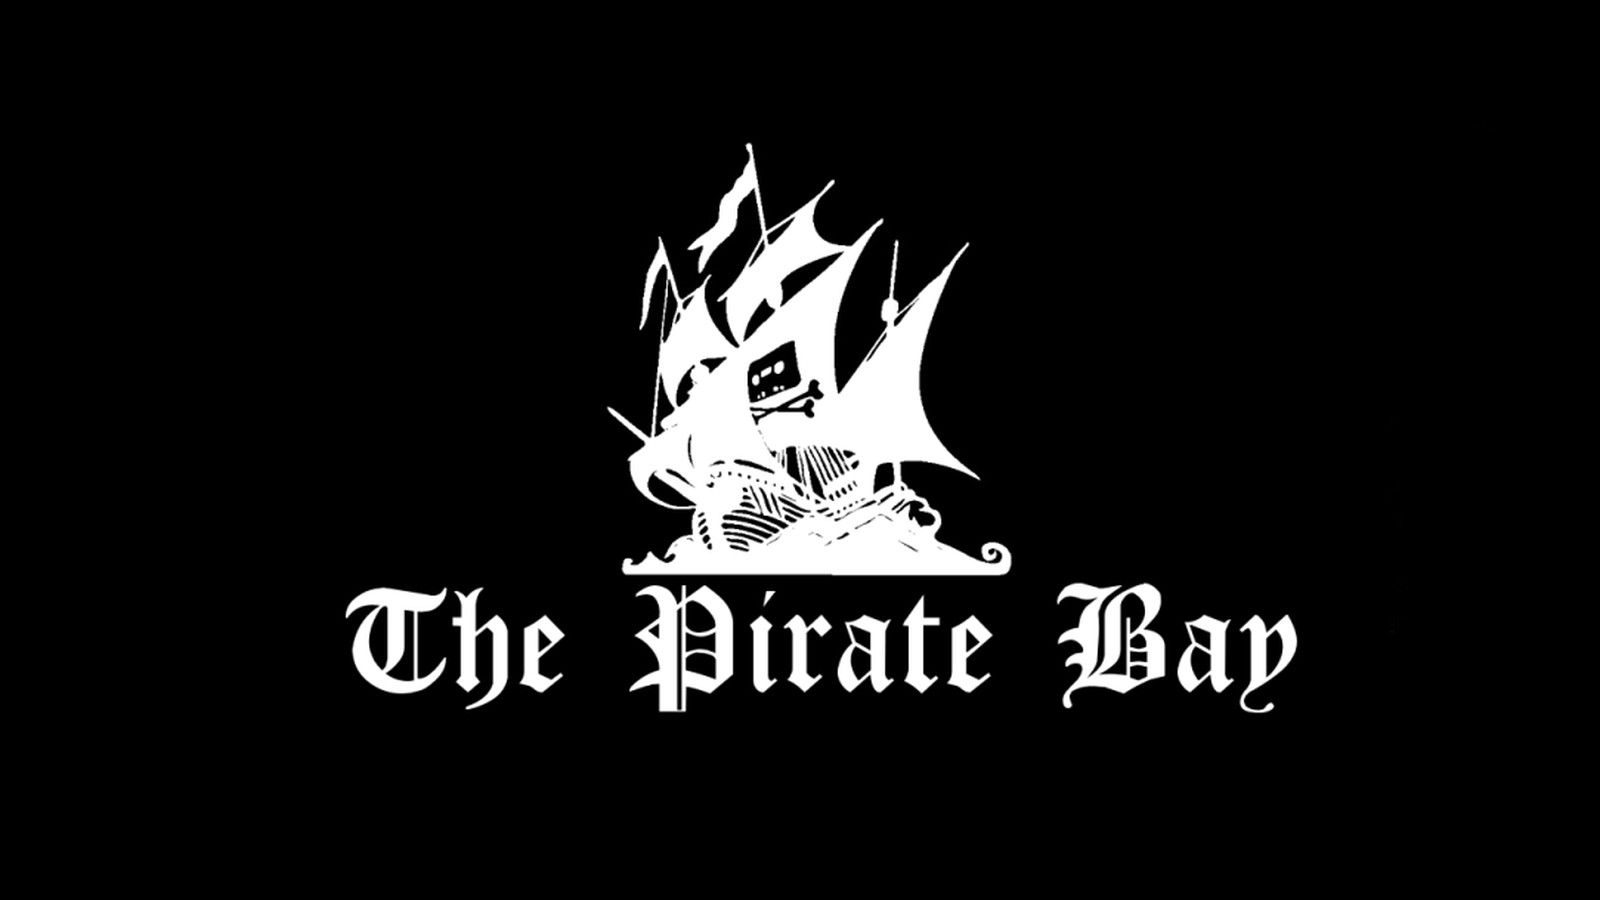 Amplitube 3 full pirate bay torrents torrent